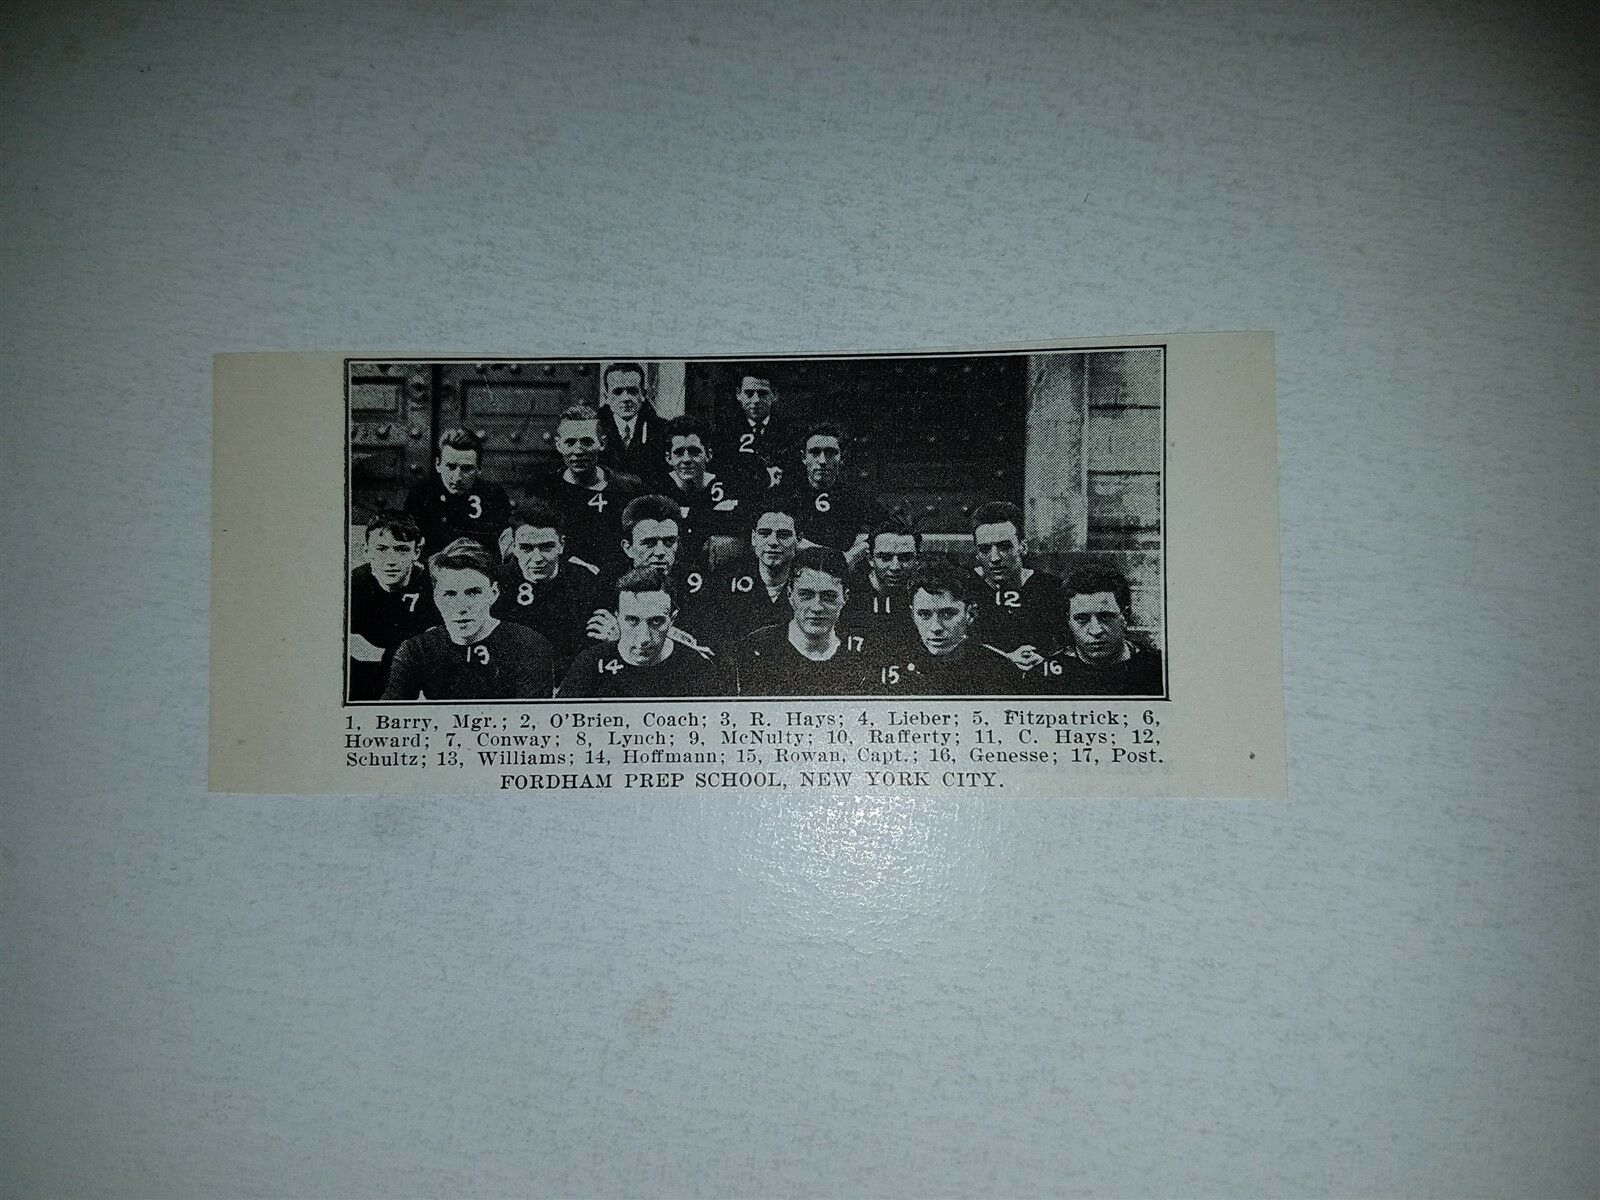 Fordham Prep School New York City 1913 Football Team Picture Rare